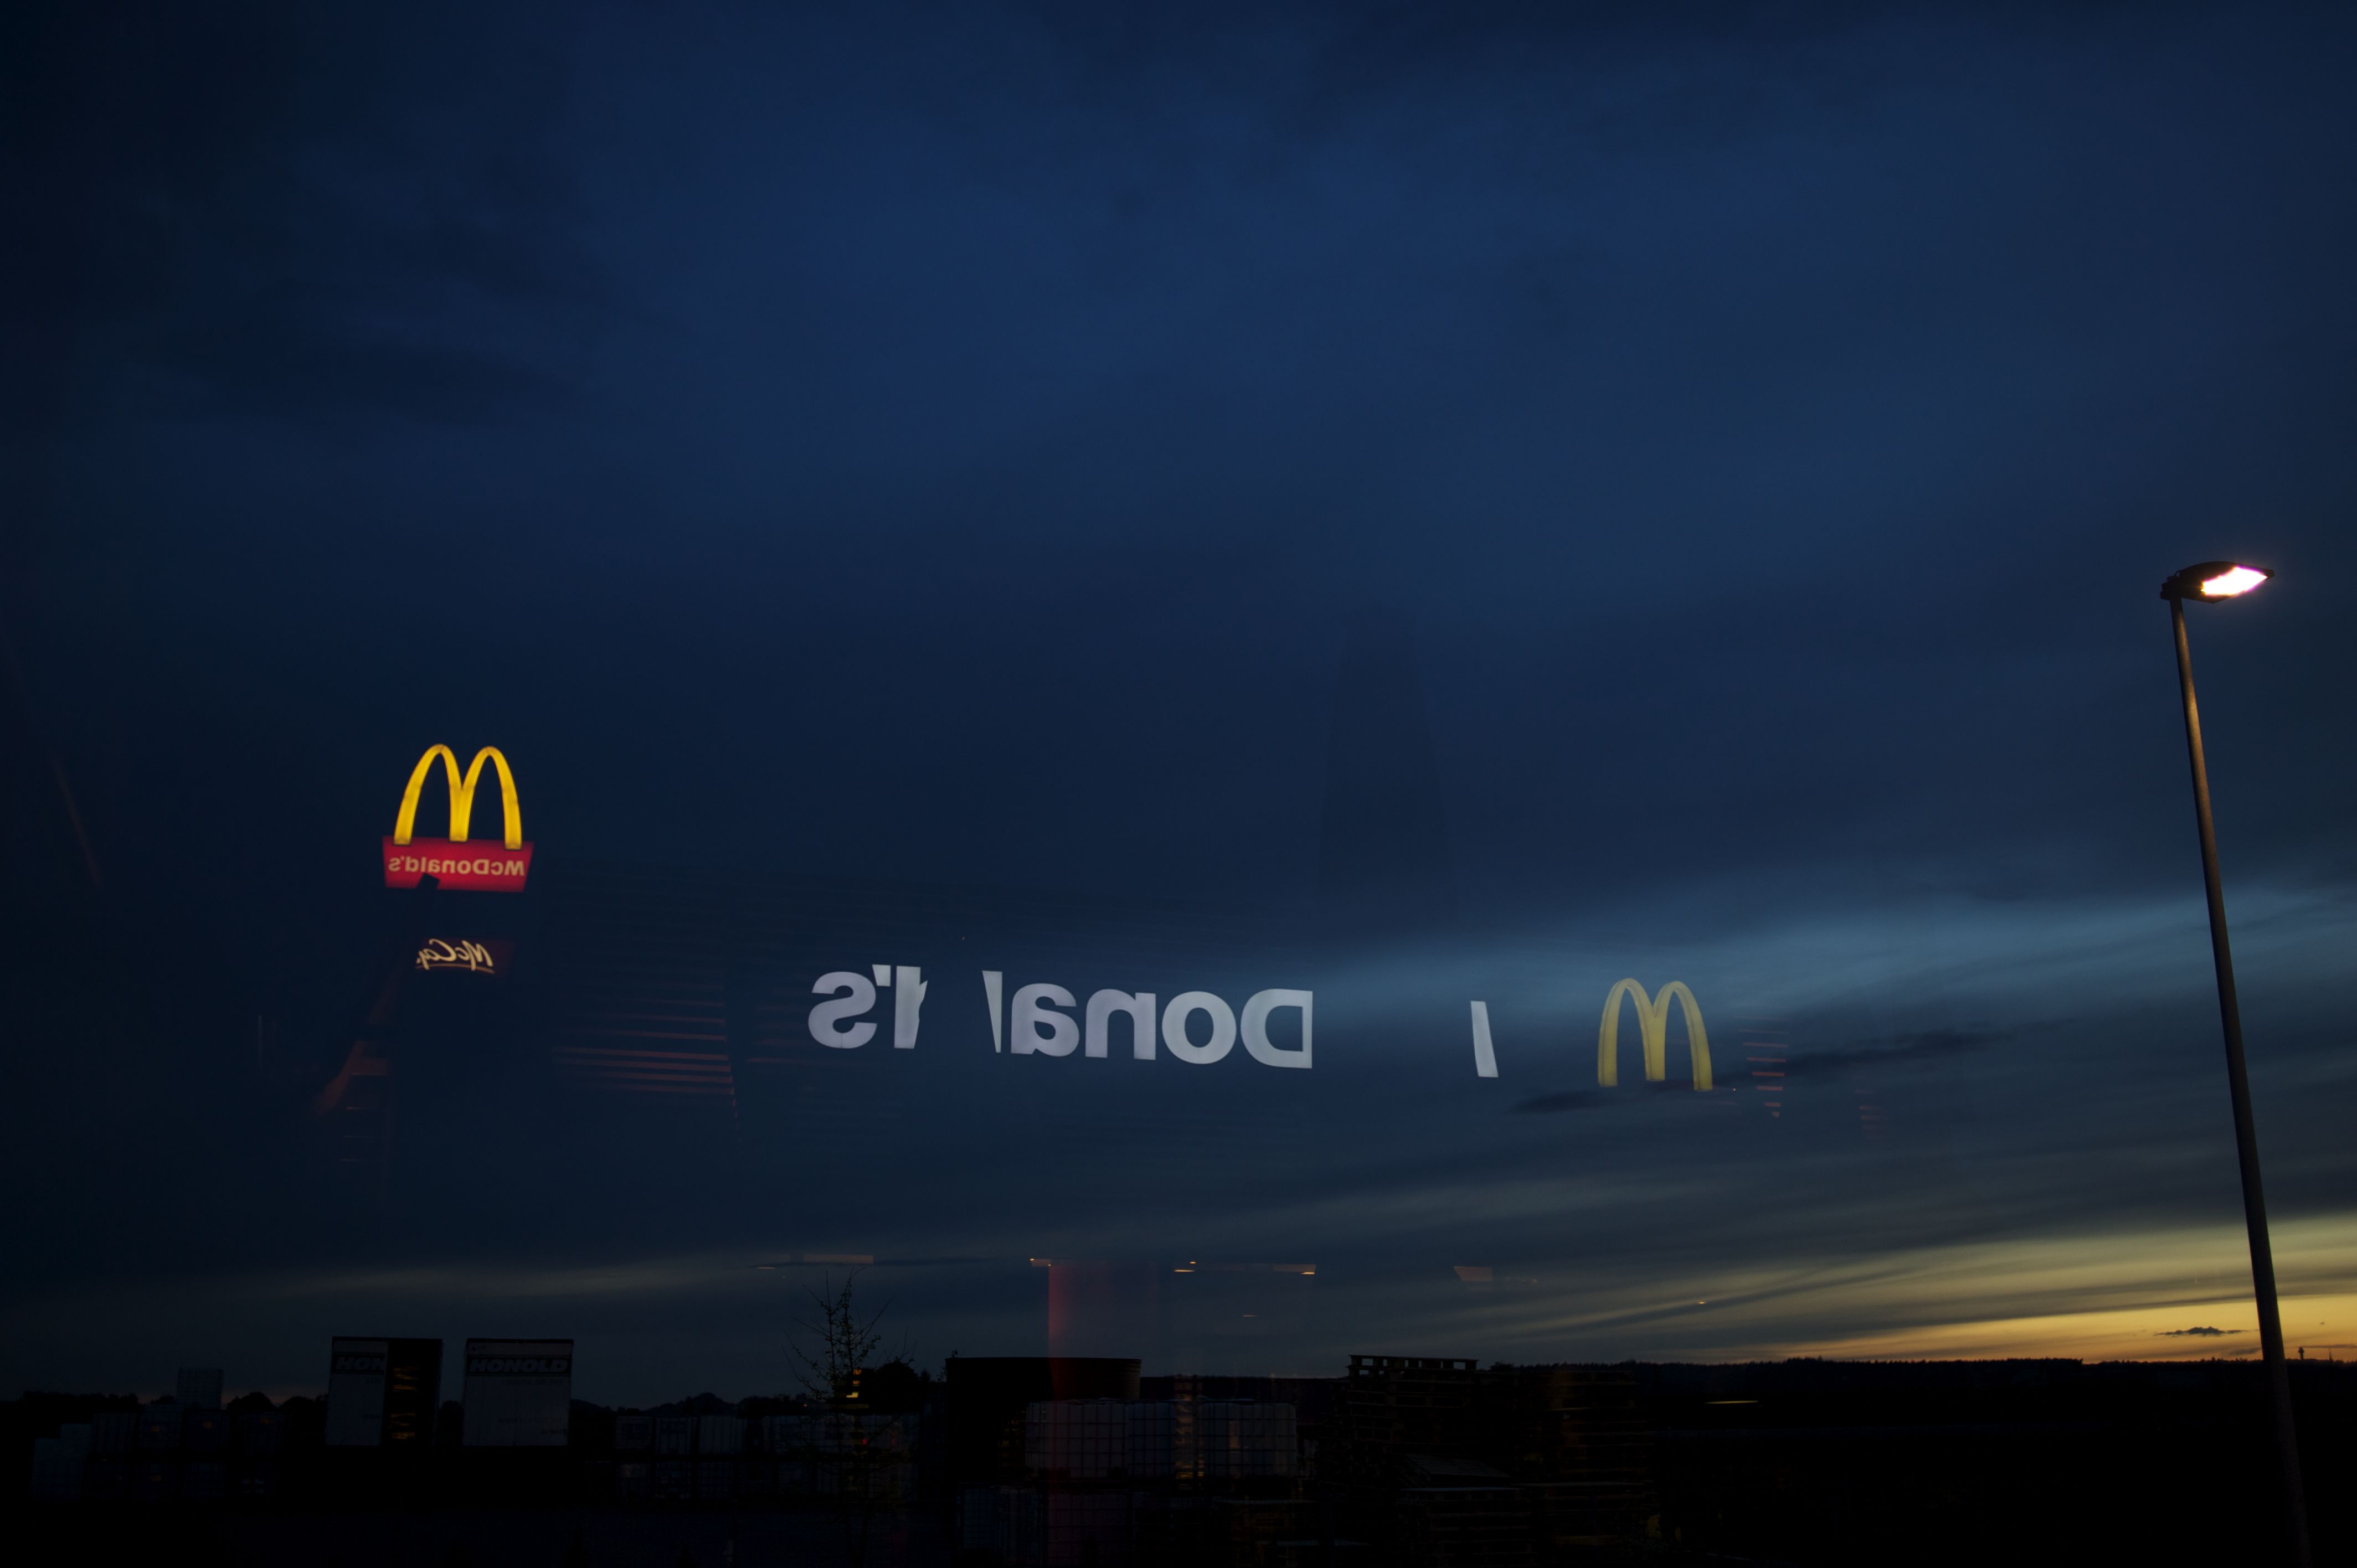 McDonalds Filiale Kirchheim Stimmungsbild